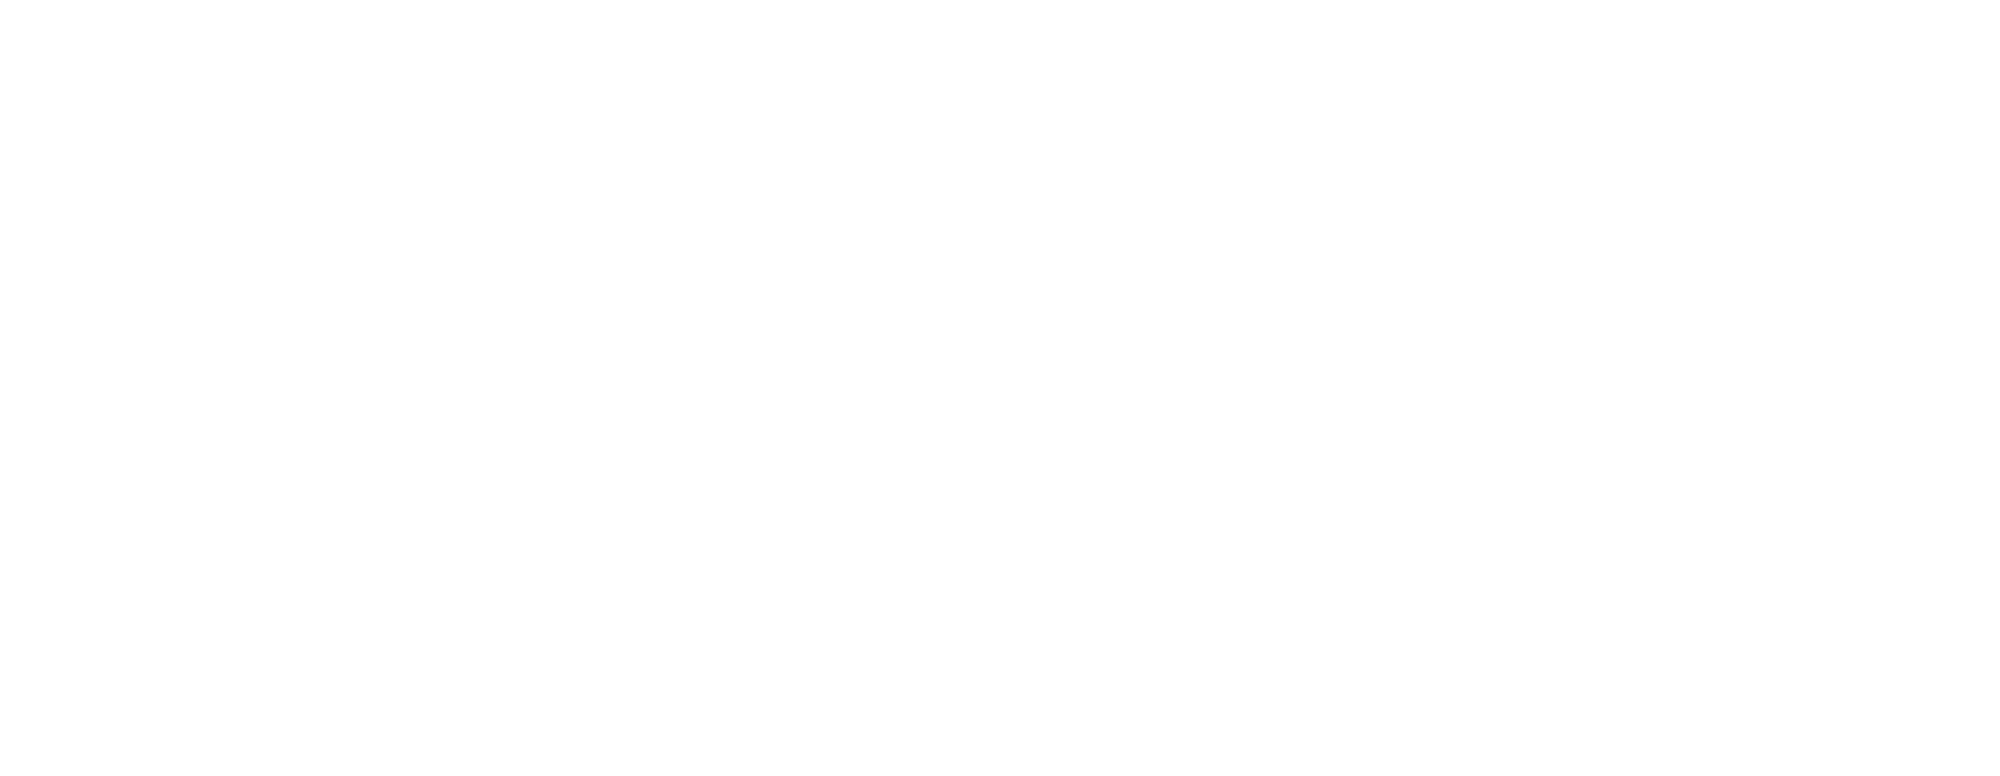 Green Creek Canine